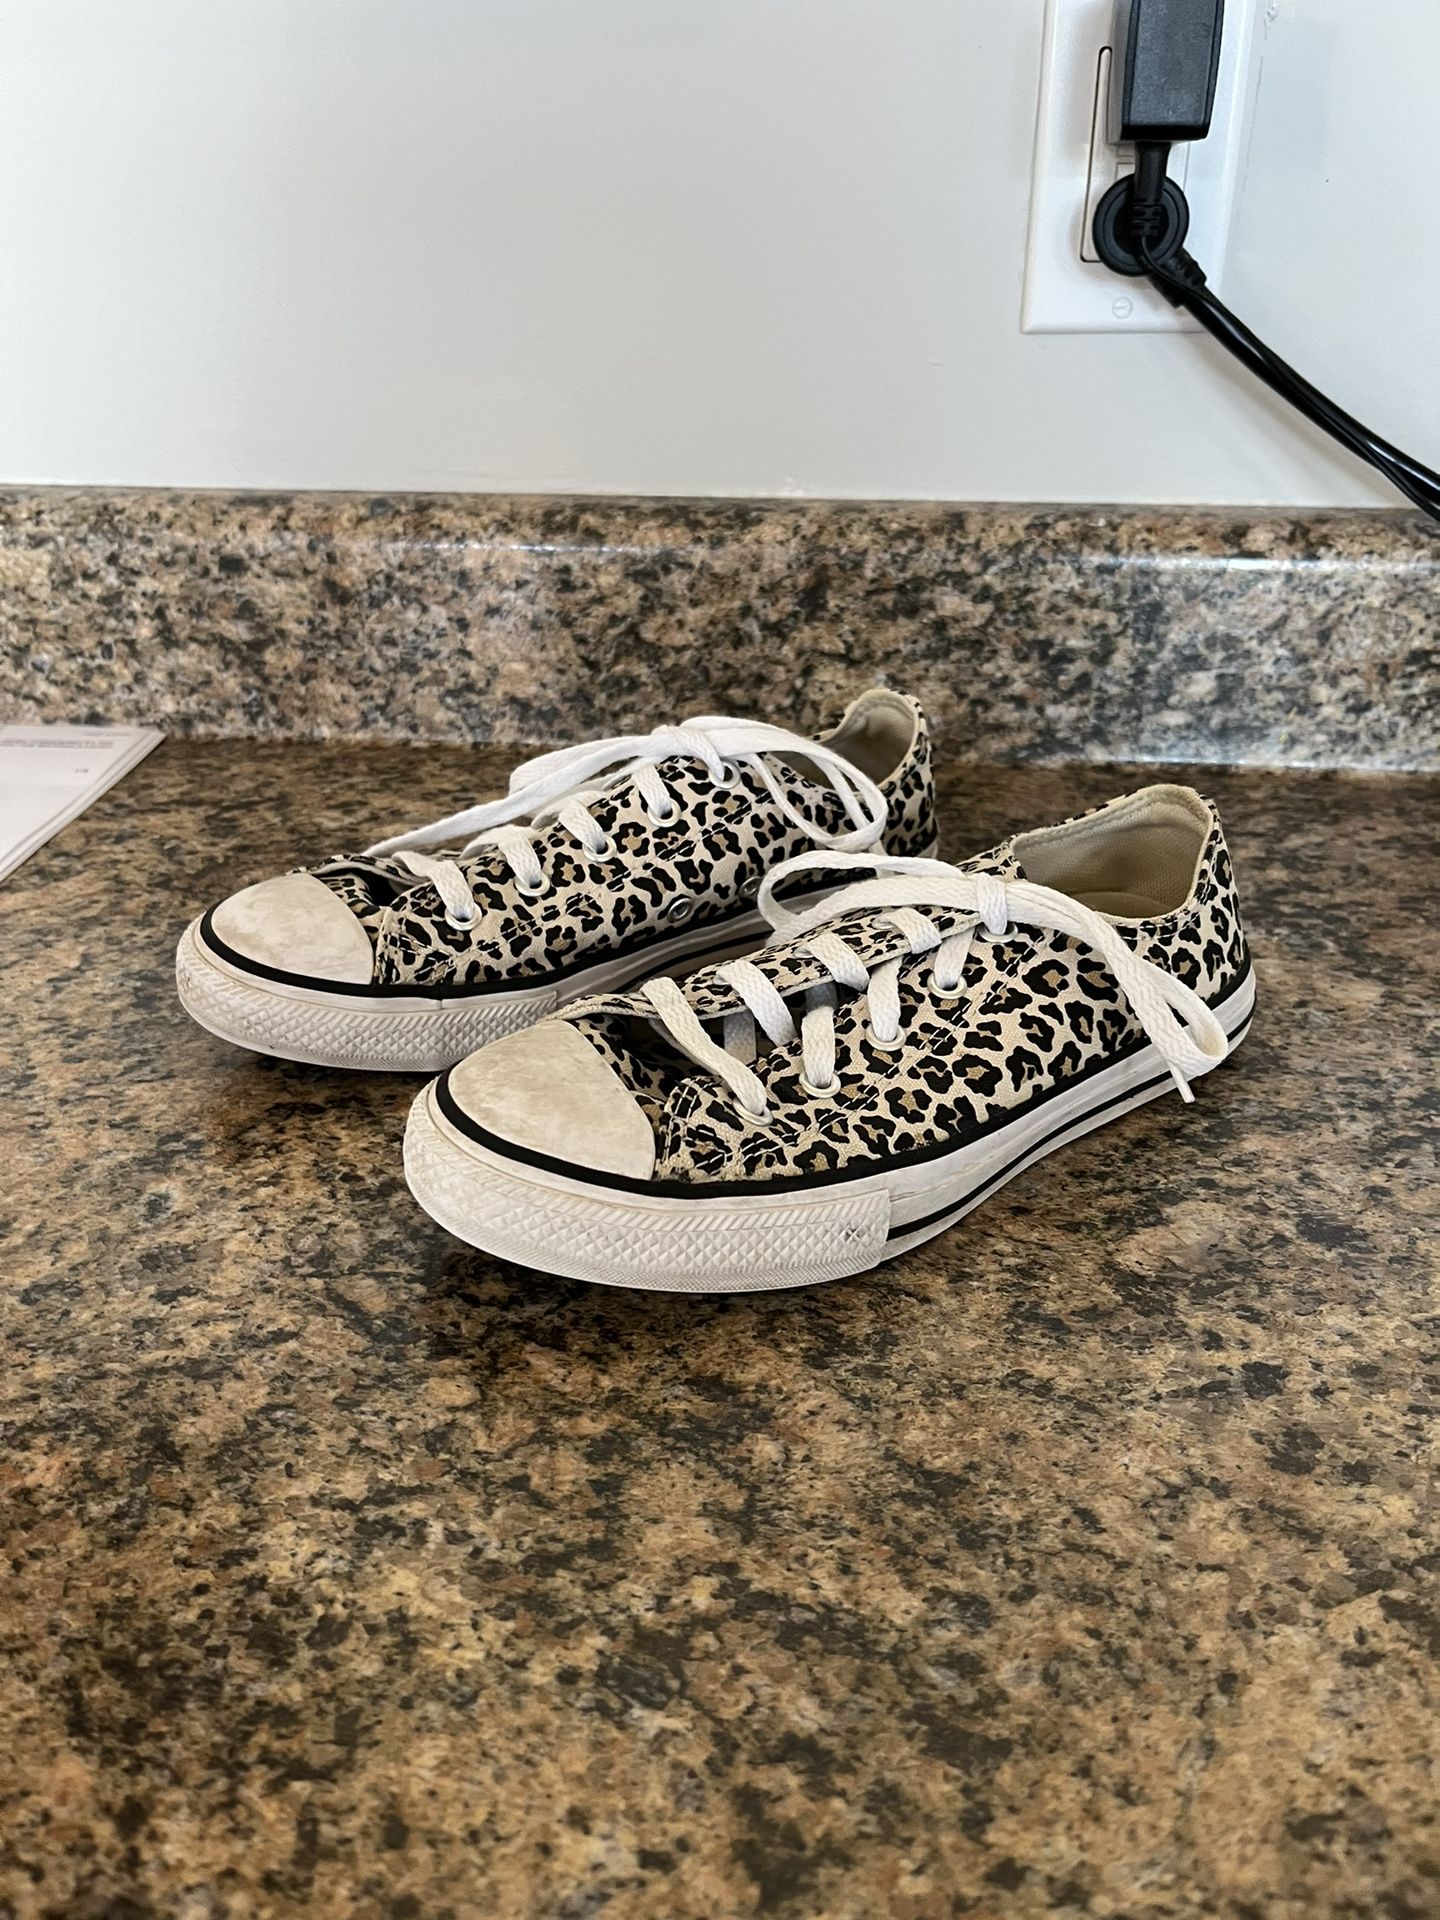 Girls Leopard Converse Shoes